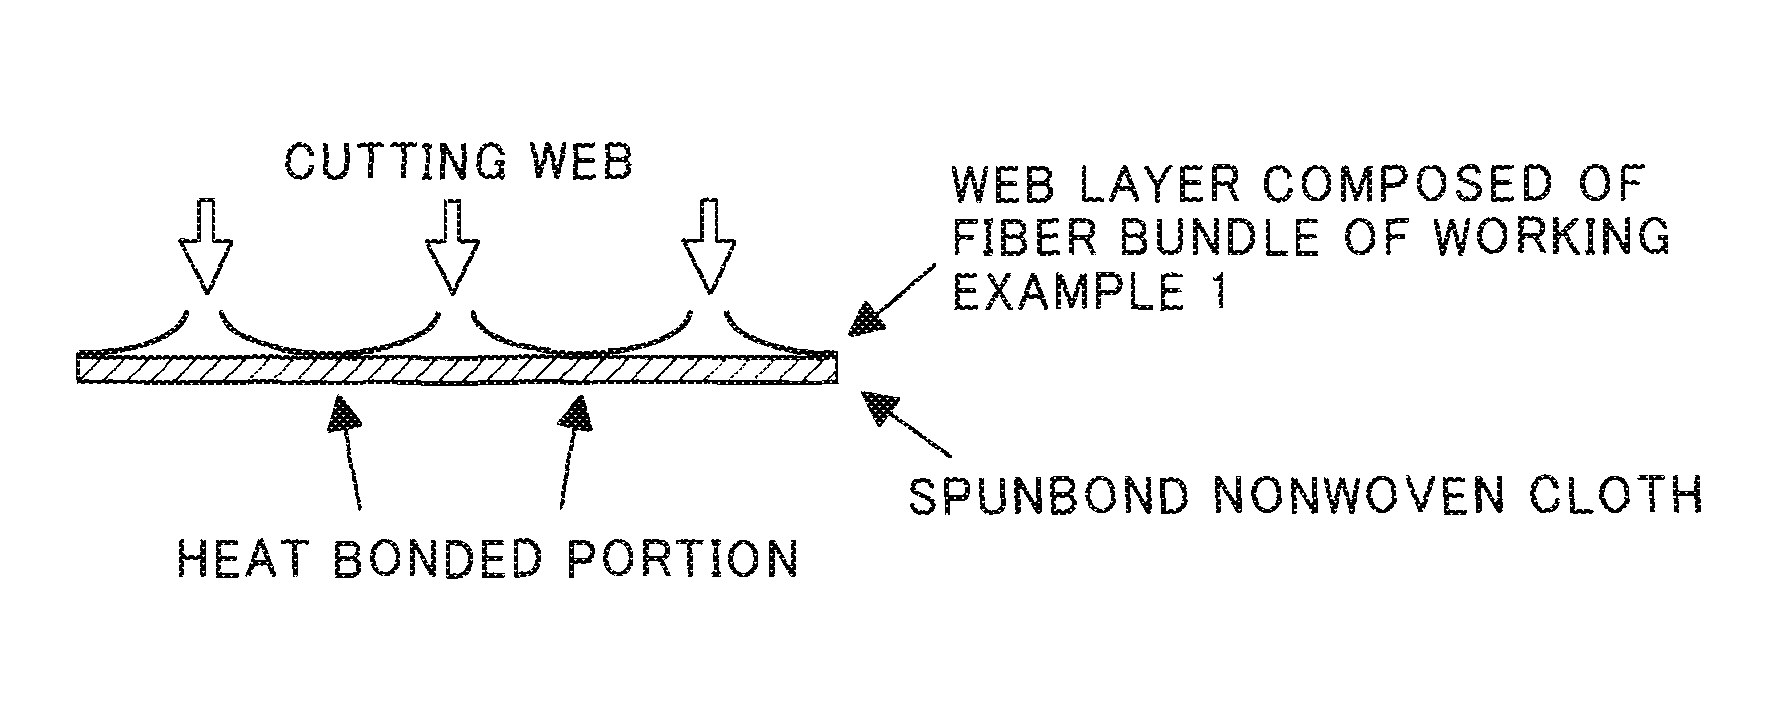 Fiber bundle and web